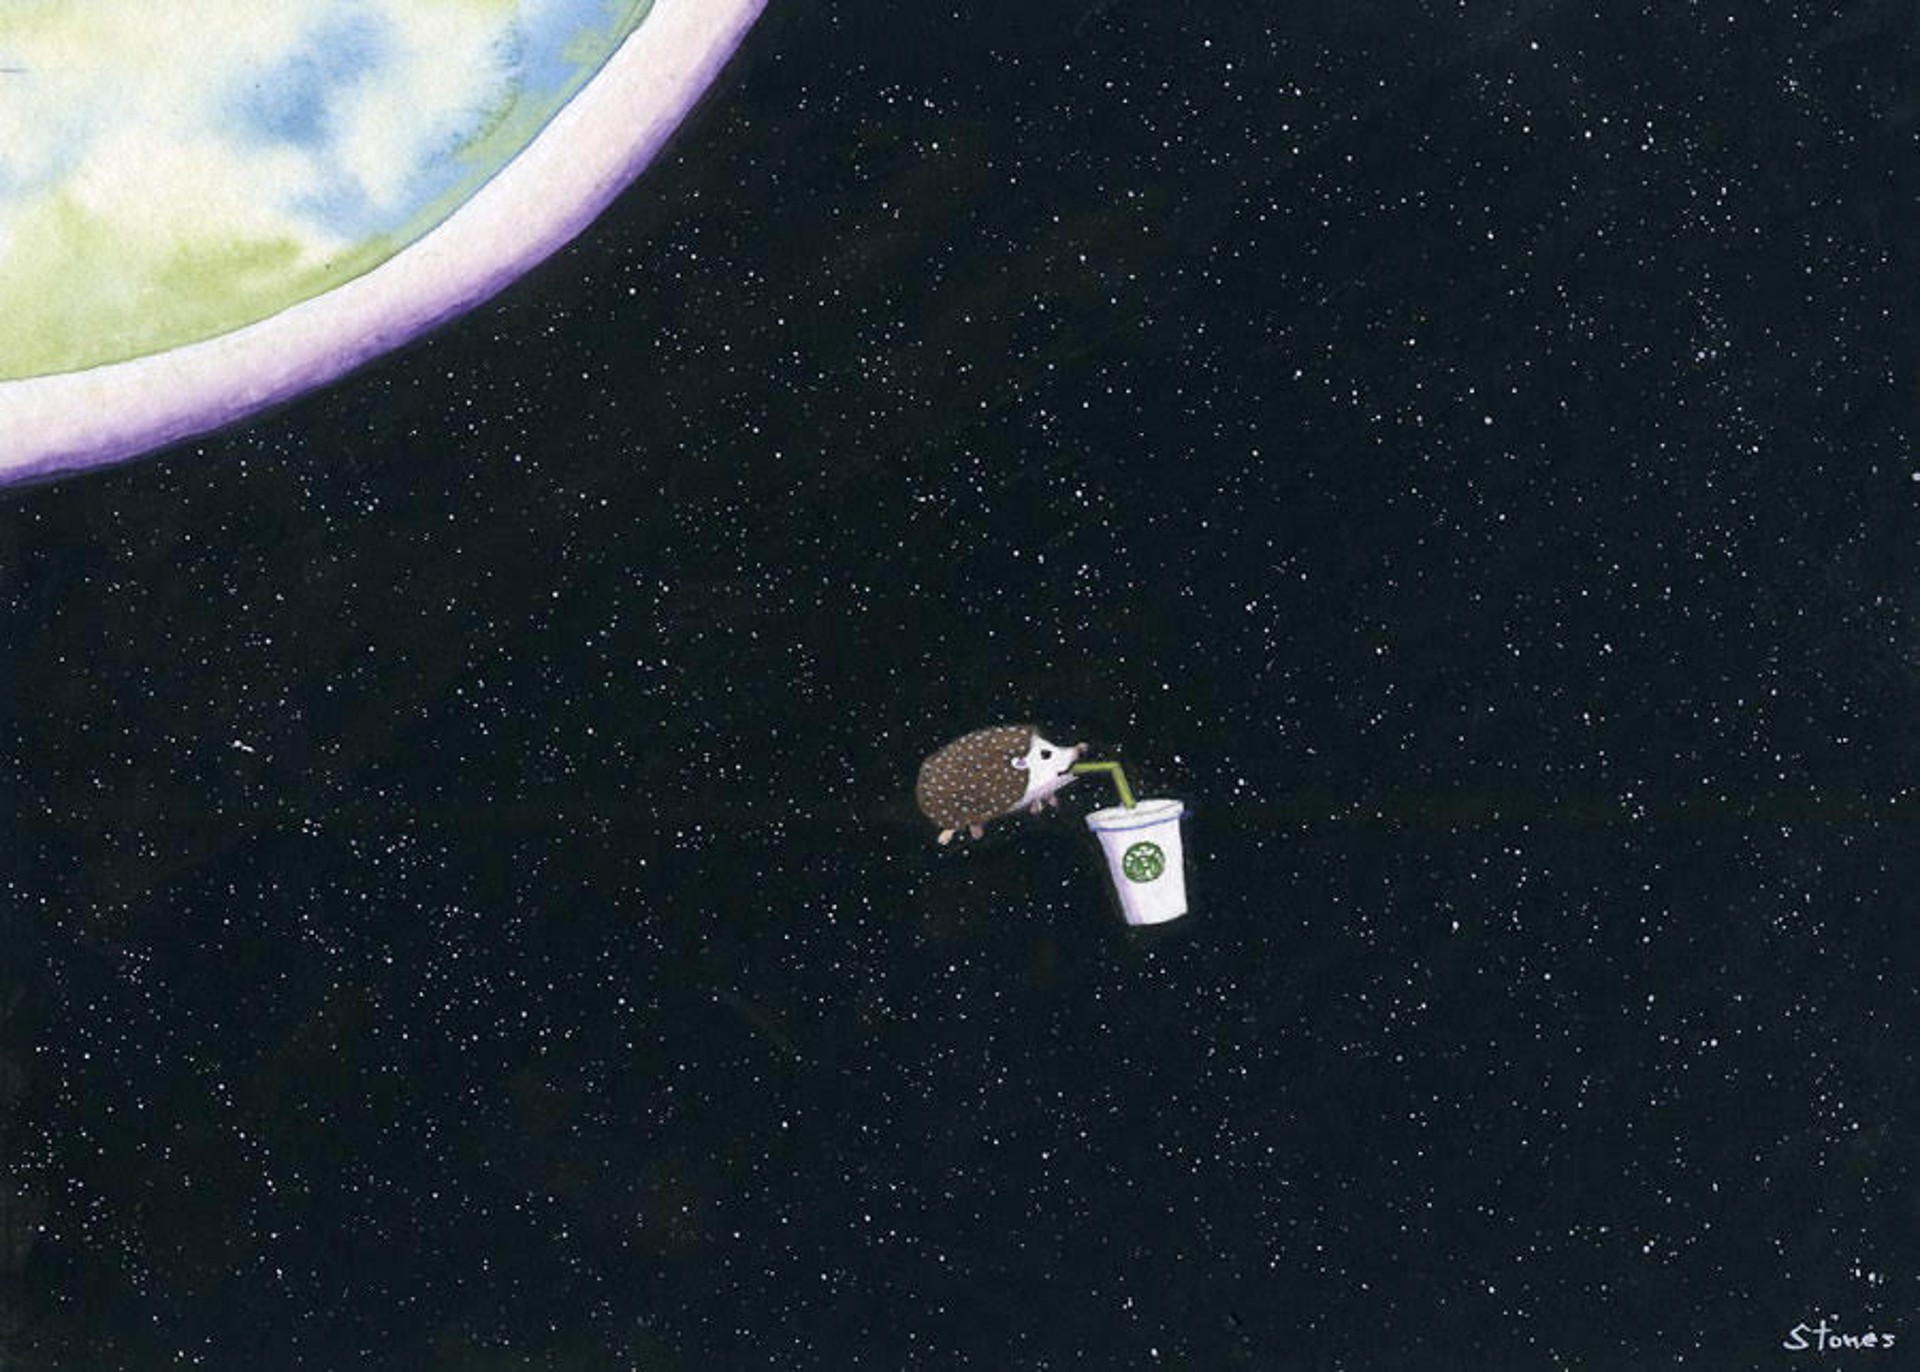 Space Hedgehogs Love Starbucks by Greg Stones